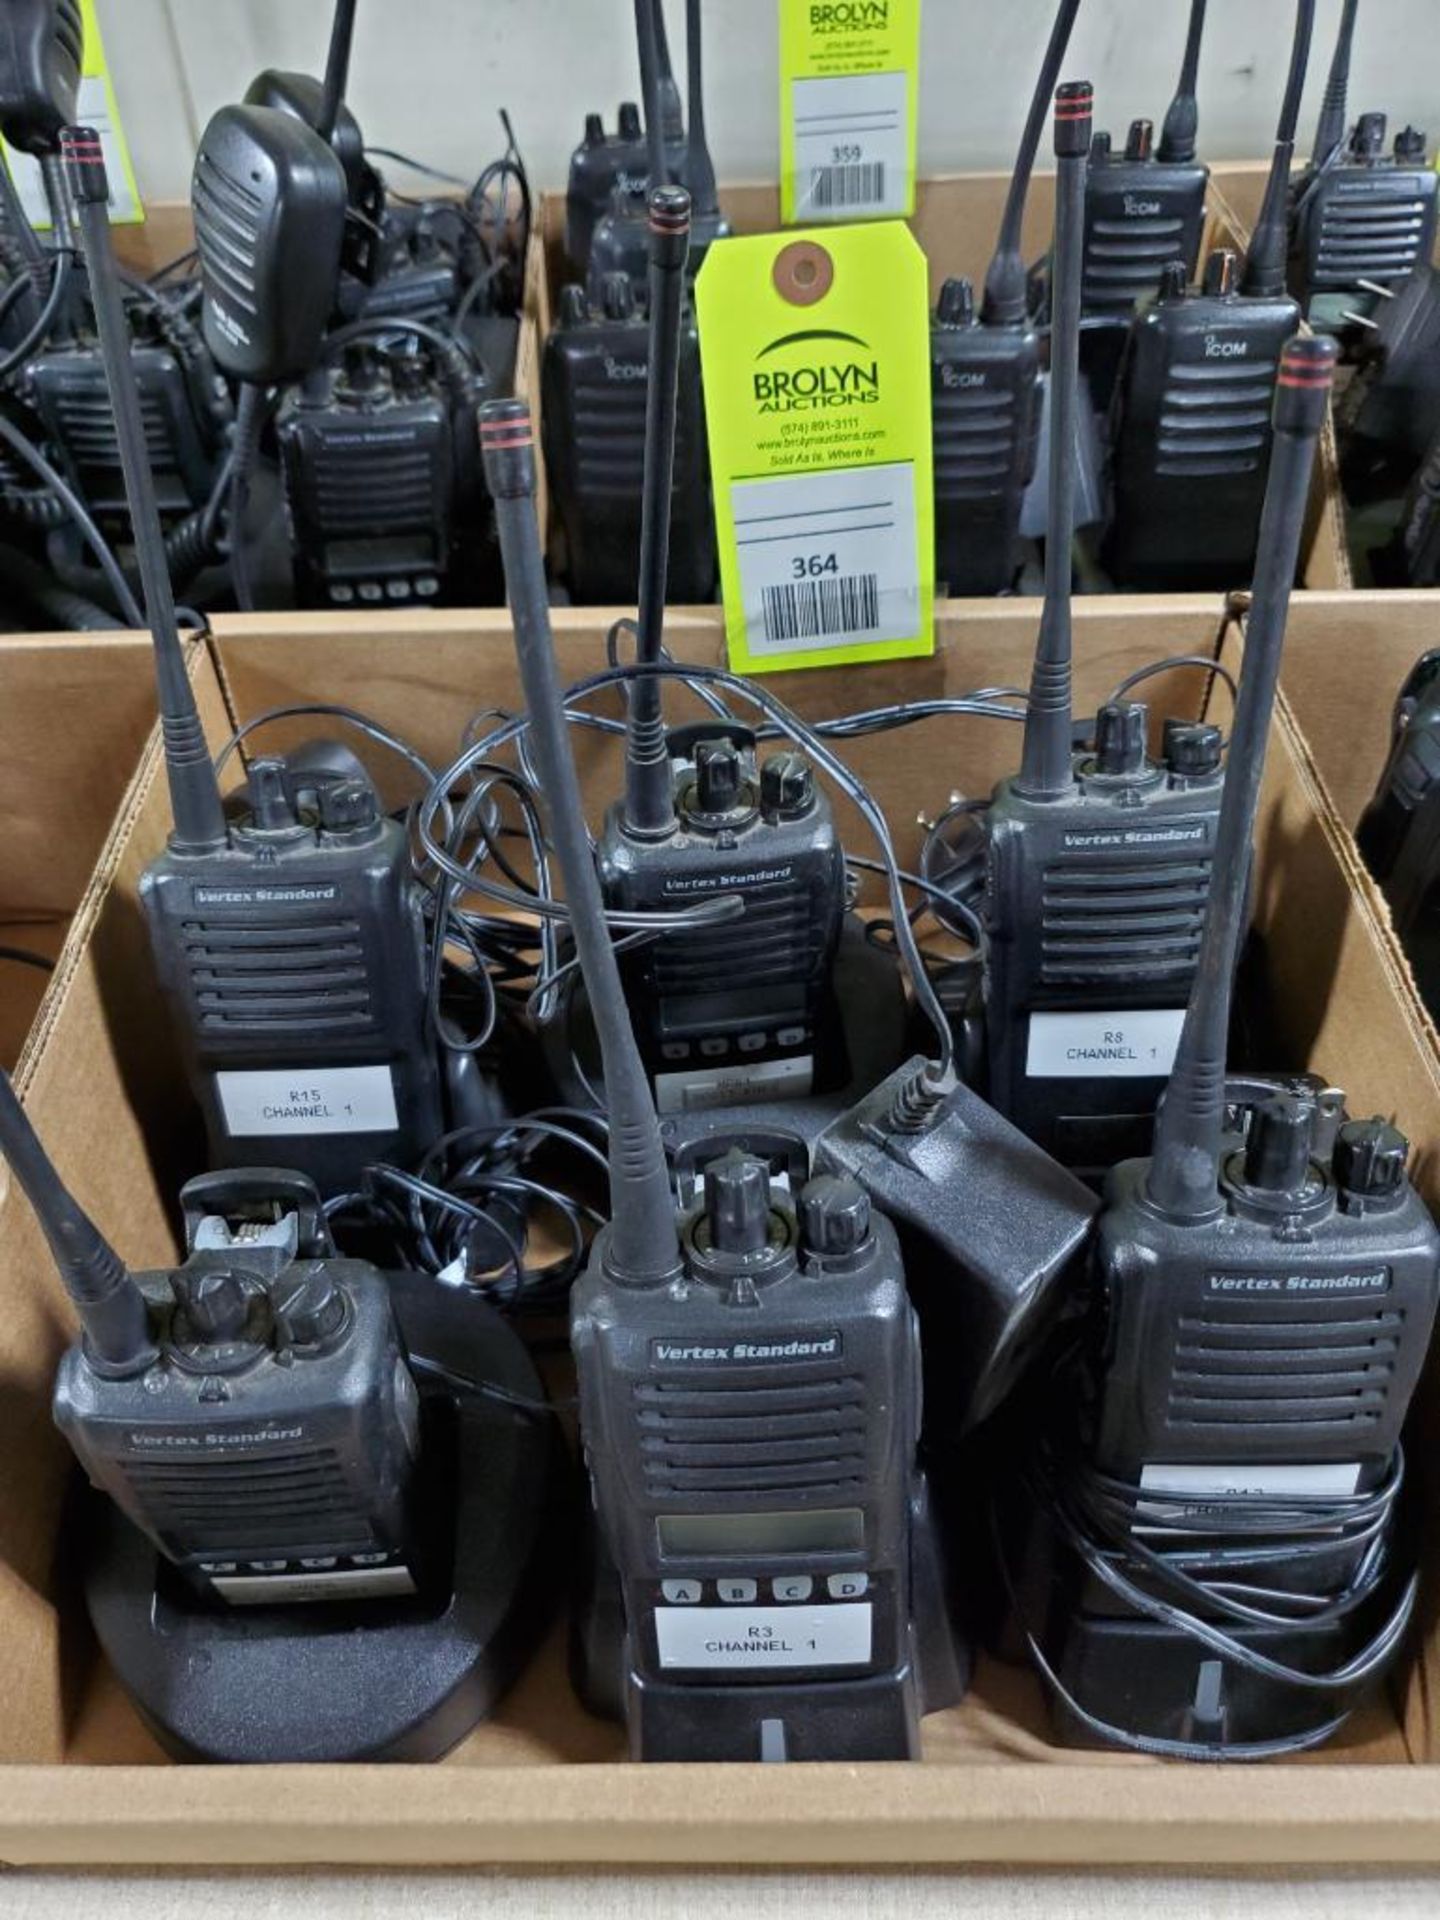 Large assortment of walkie talkies.